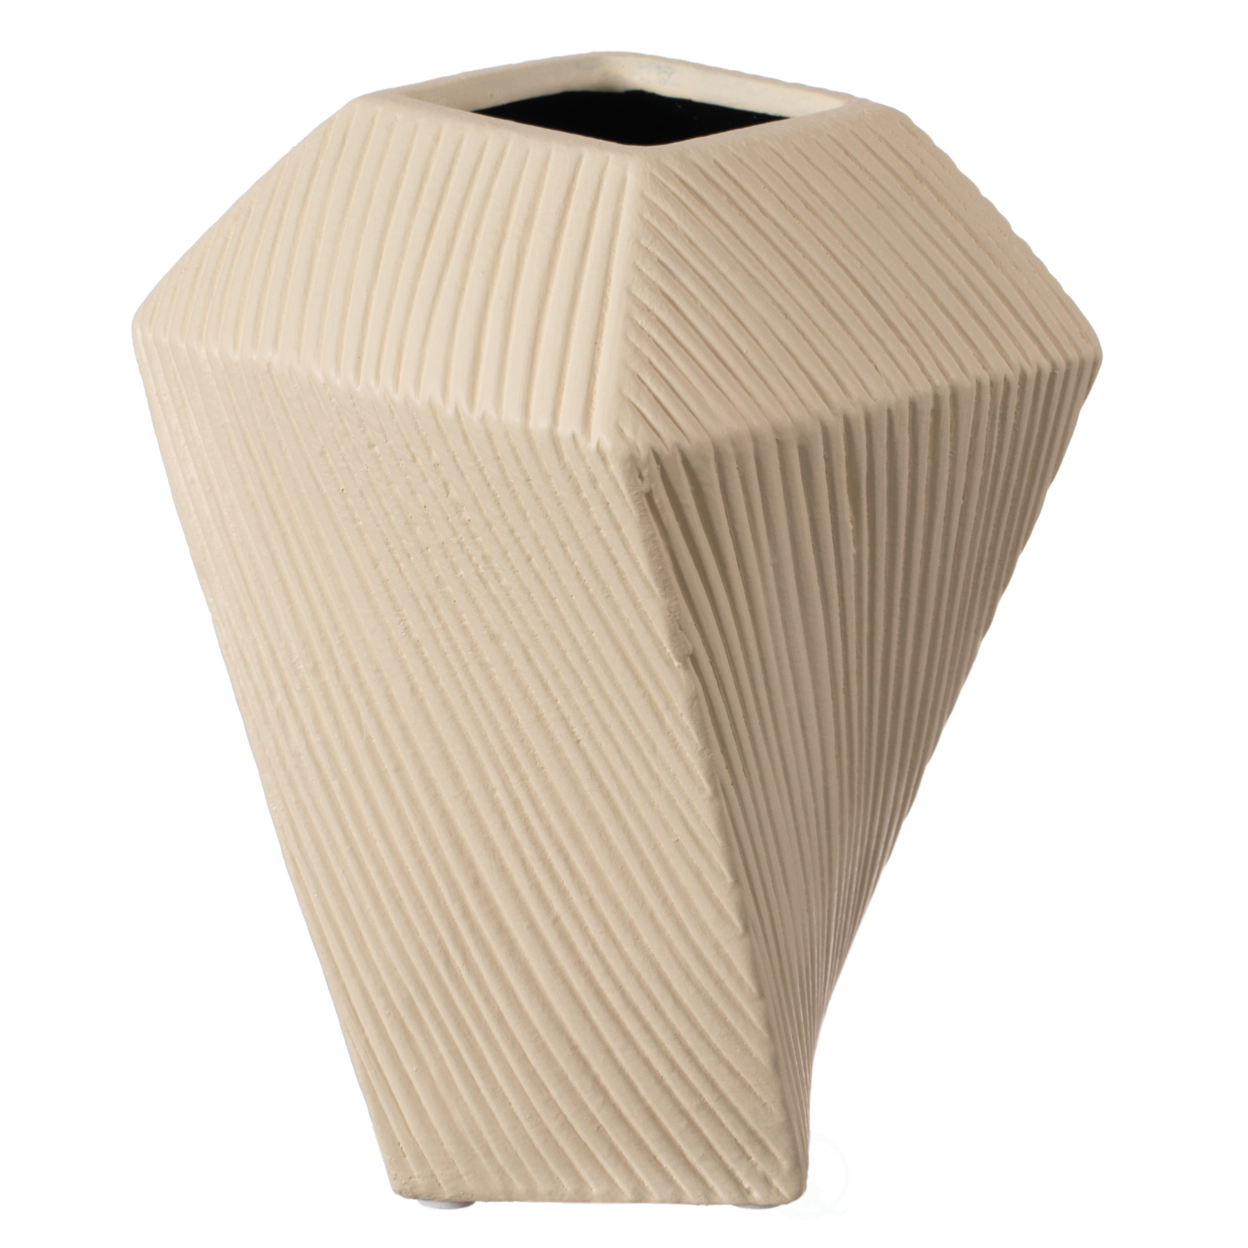 Decorative Ceramic Square Twisted Centerpiece Table Vase - Beige